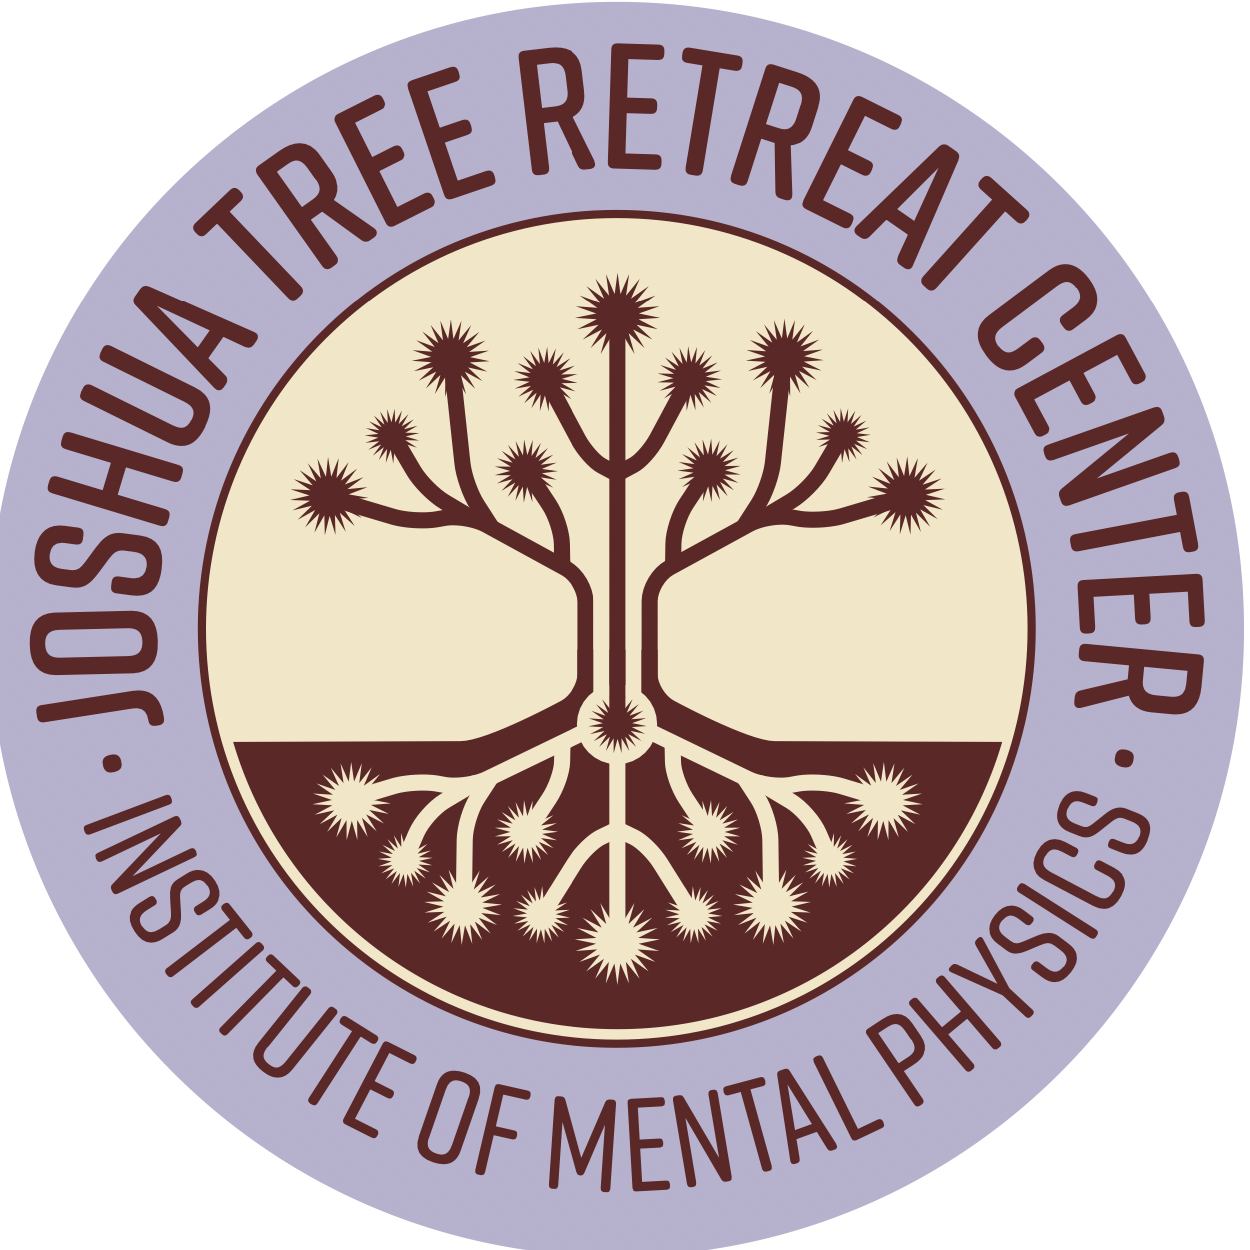 Joshua Tree Retreat Center